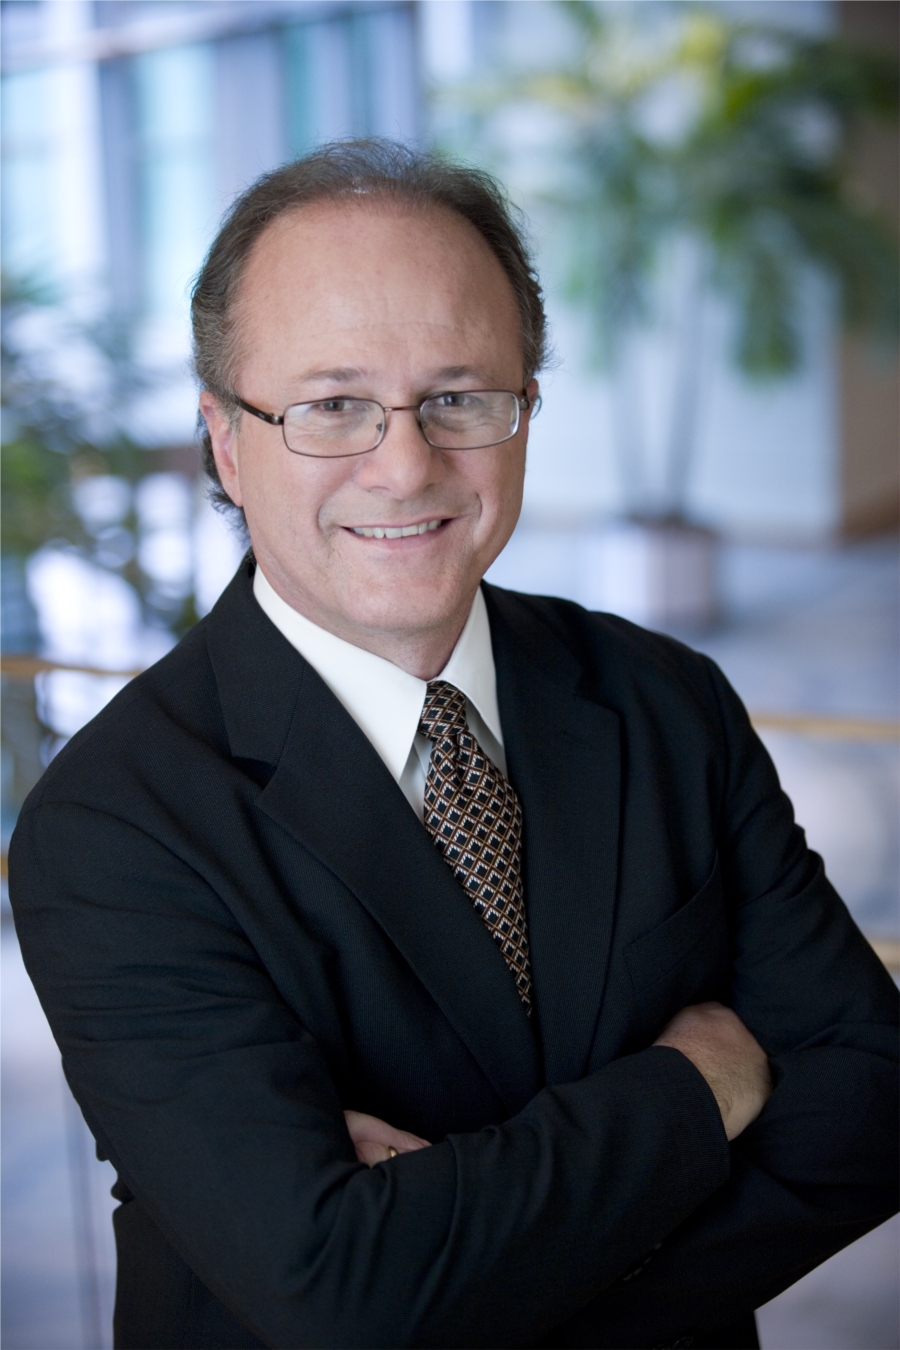 Stephen Stuut, CEO of TruePosition